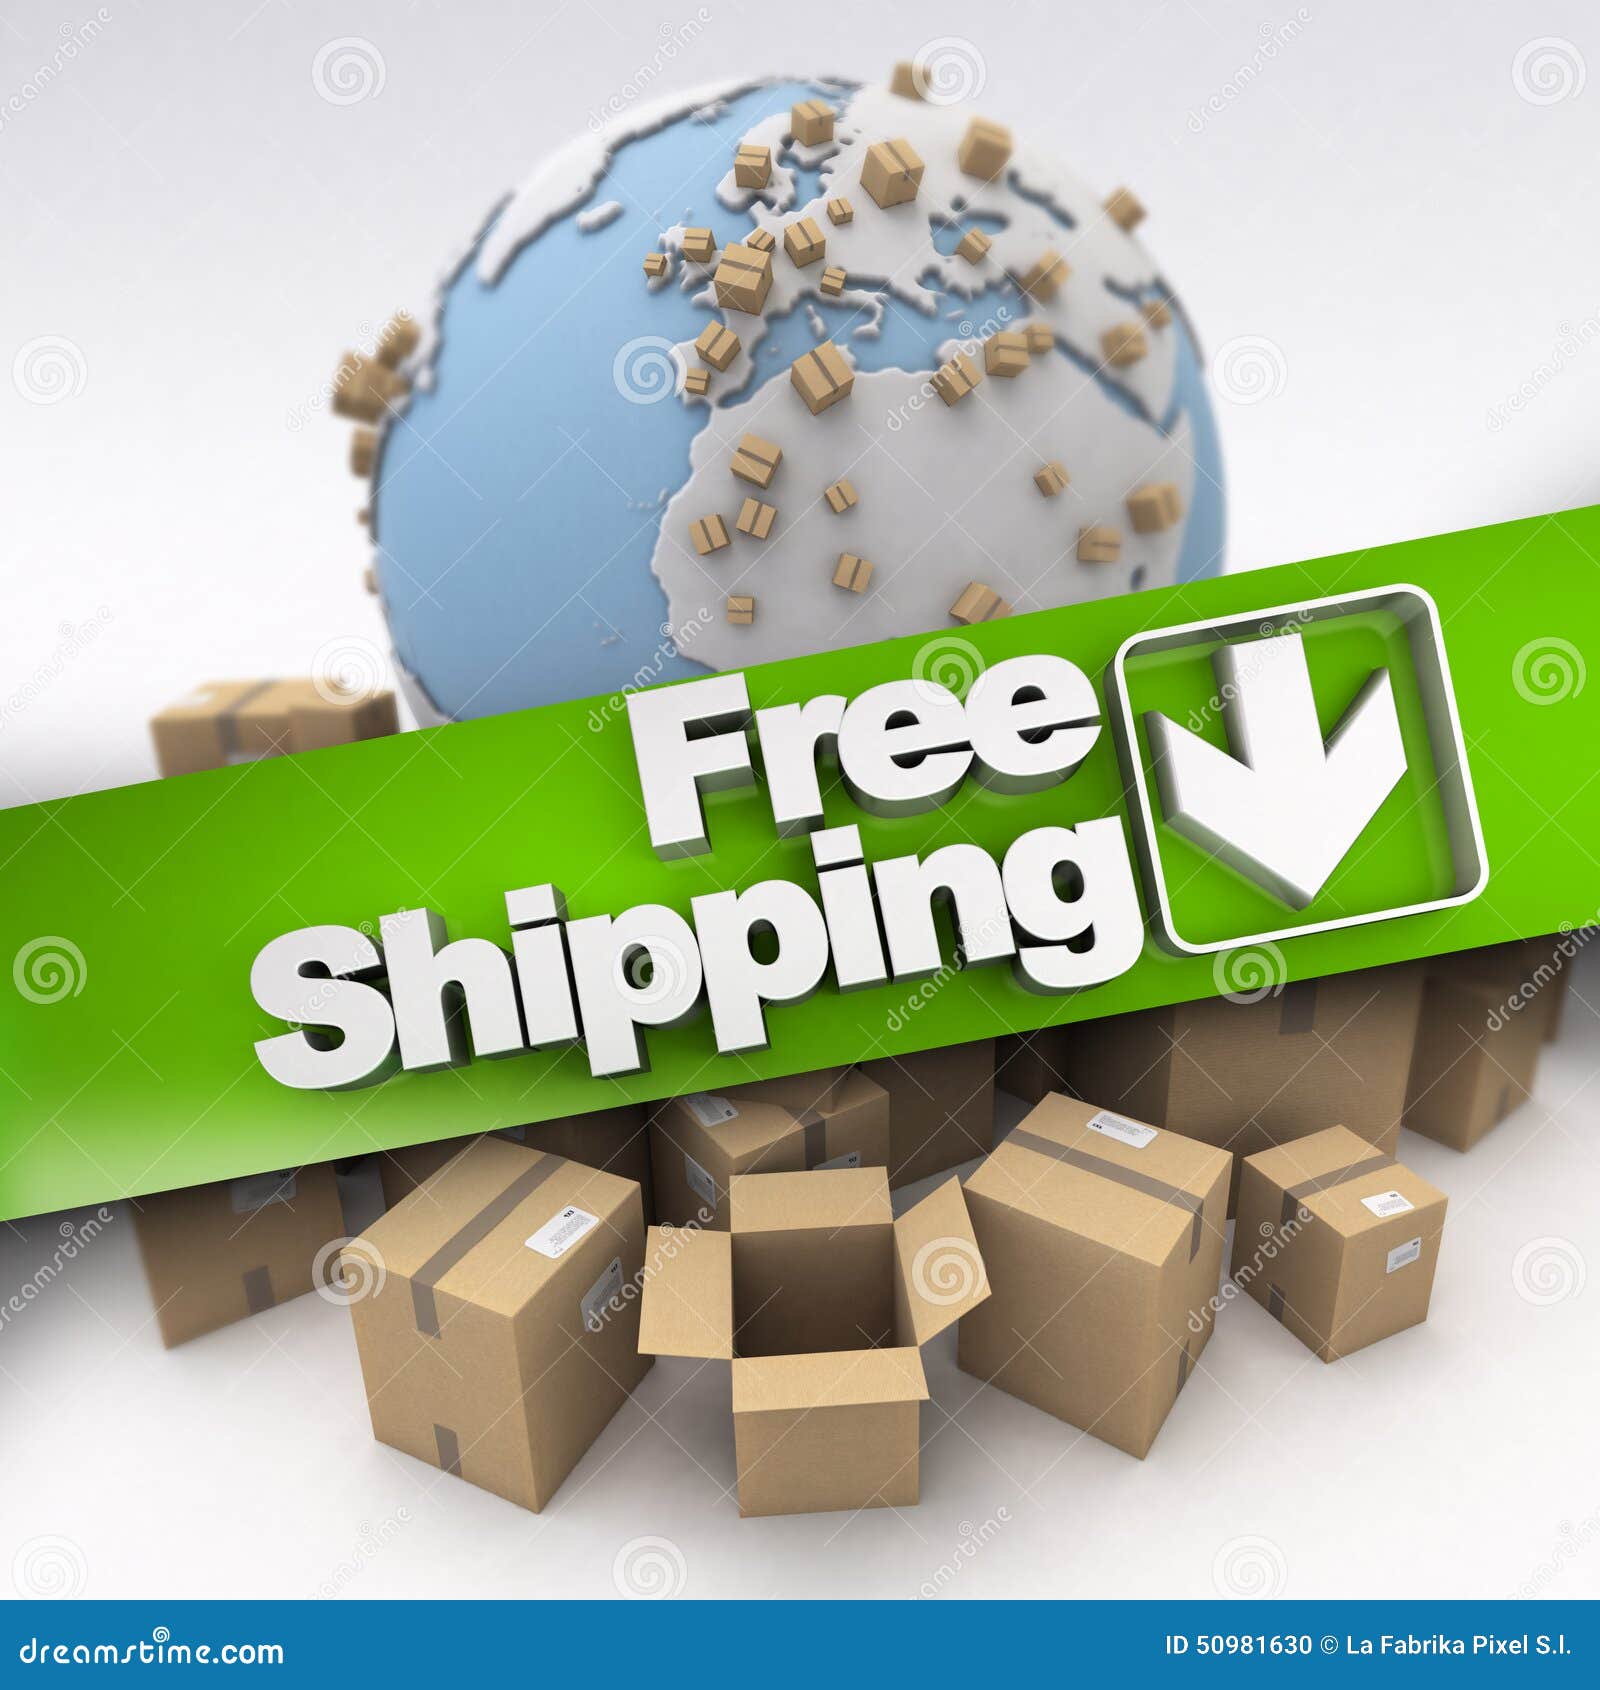 international free shipping